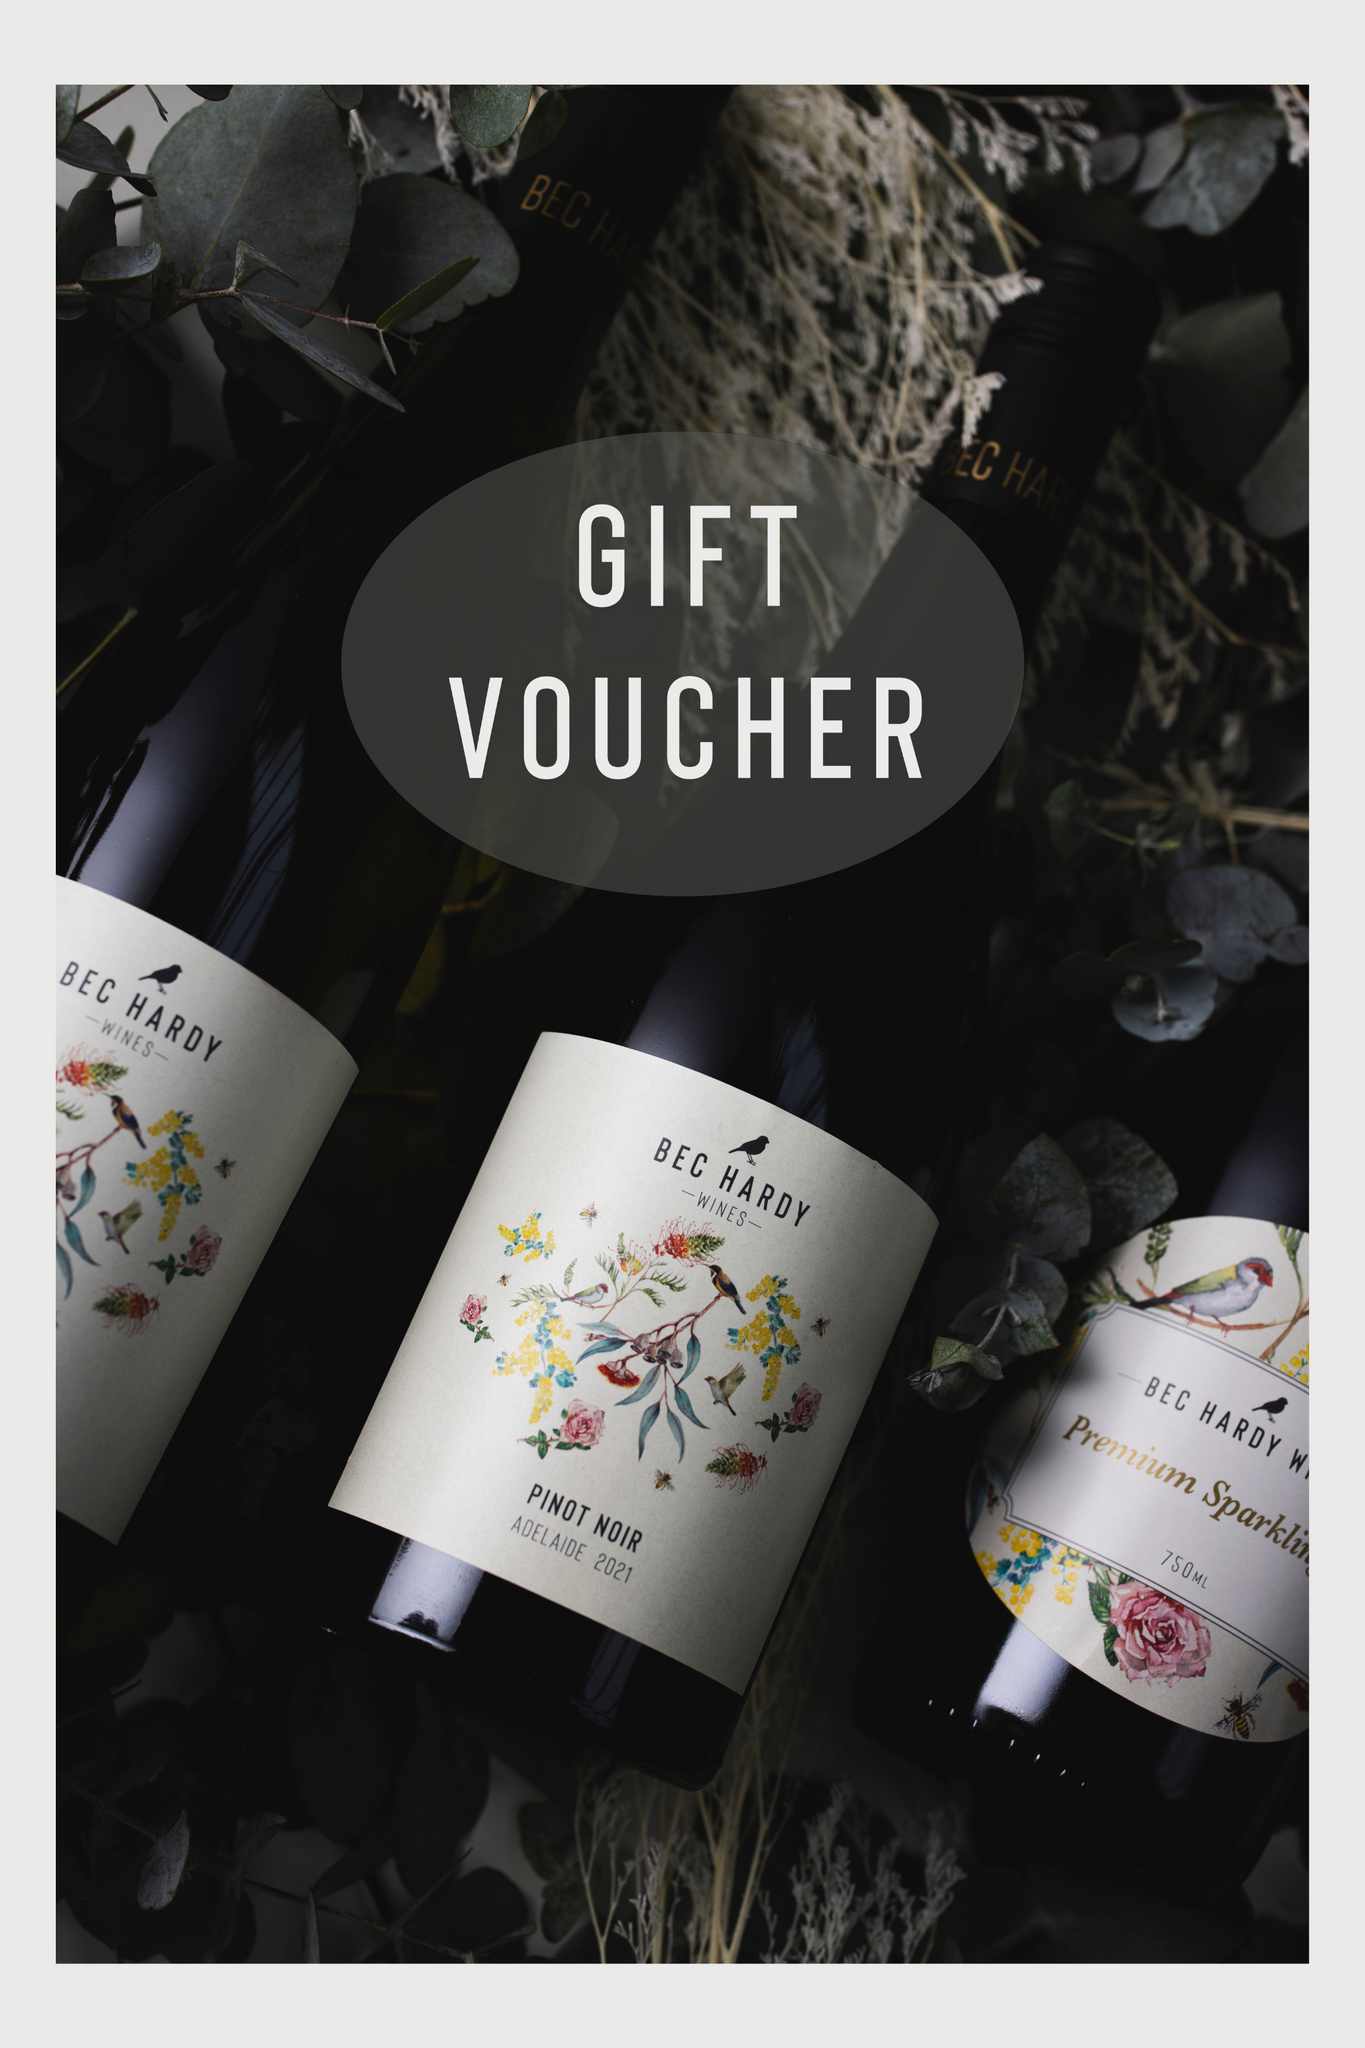 Bec Hardy Wines Gift Voucher